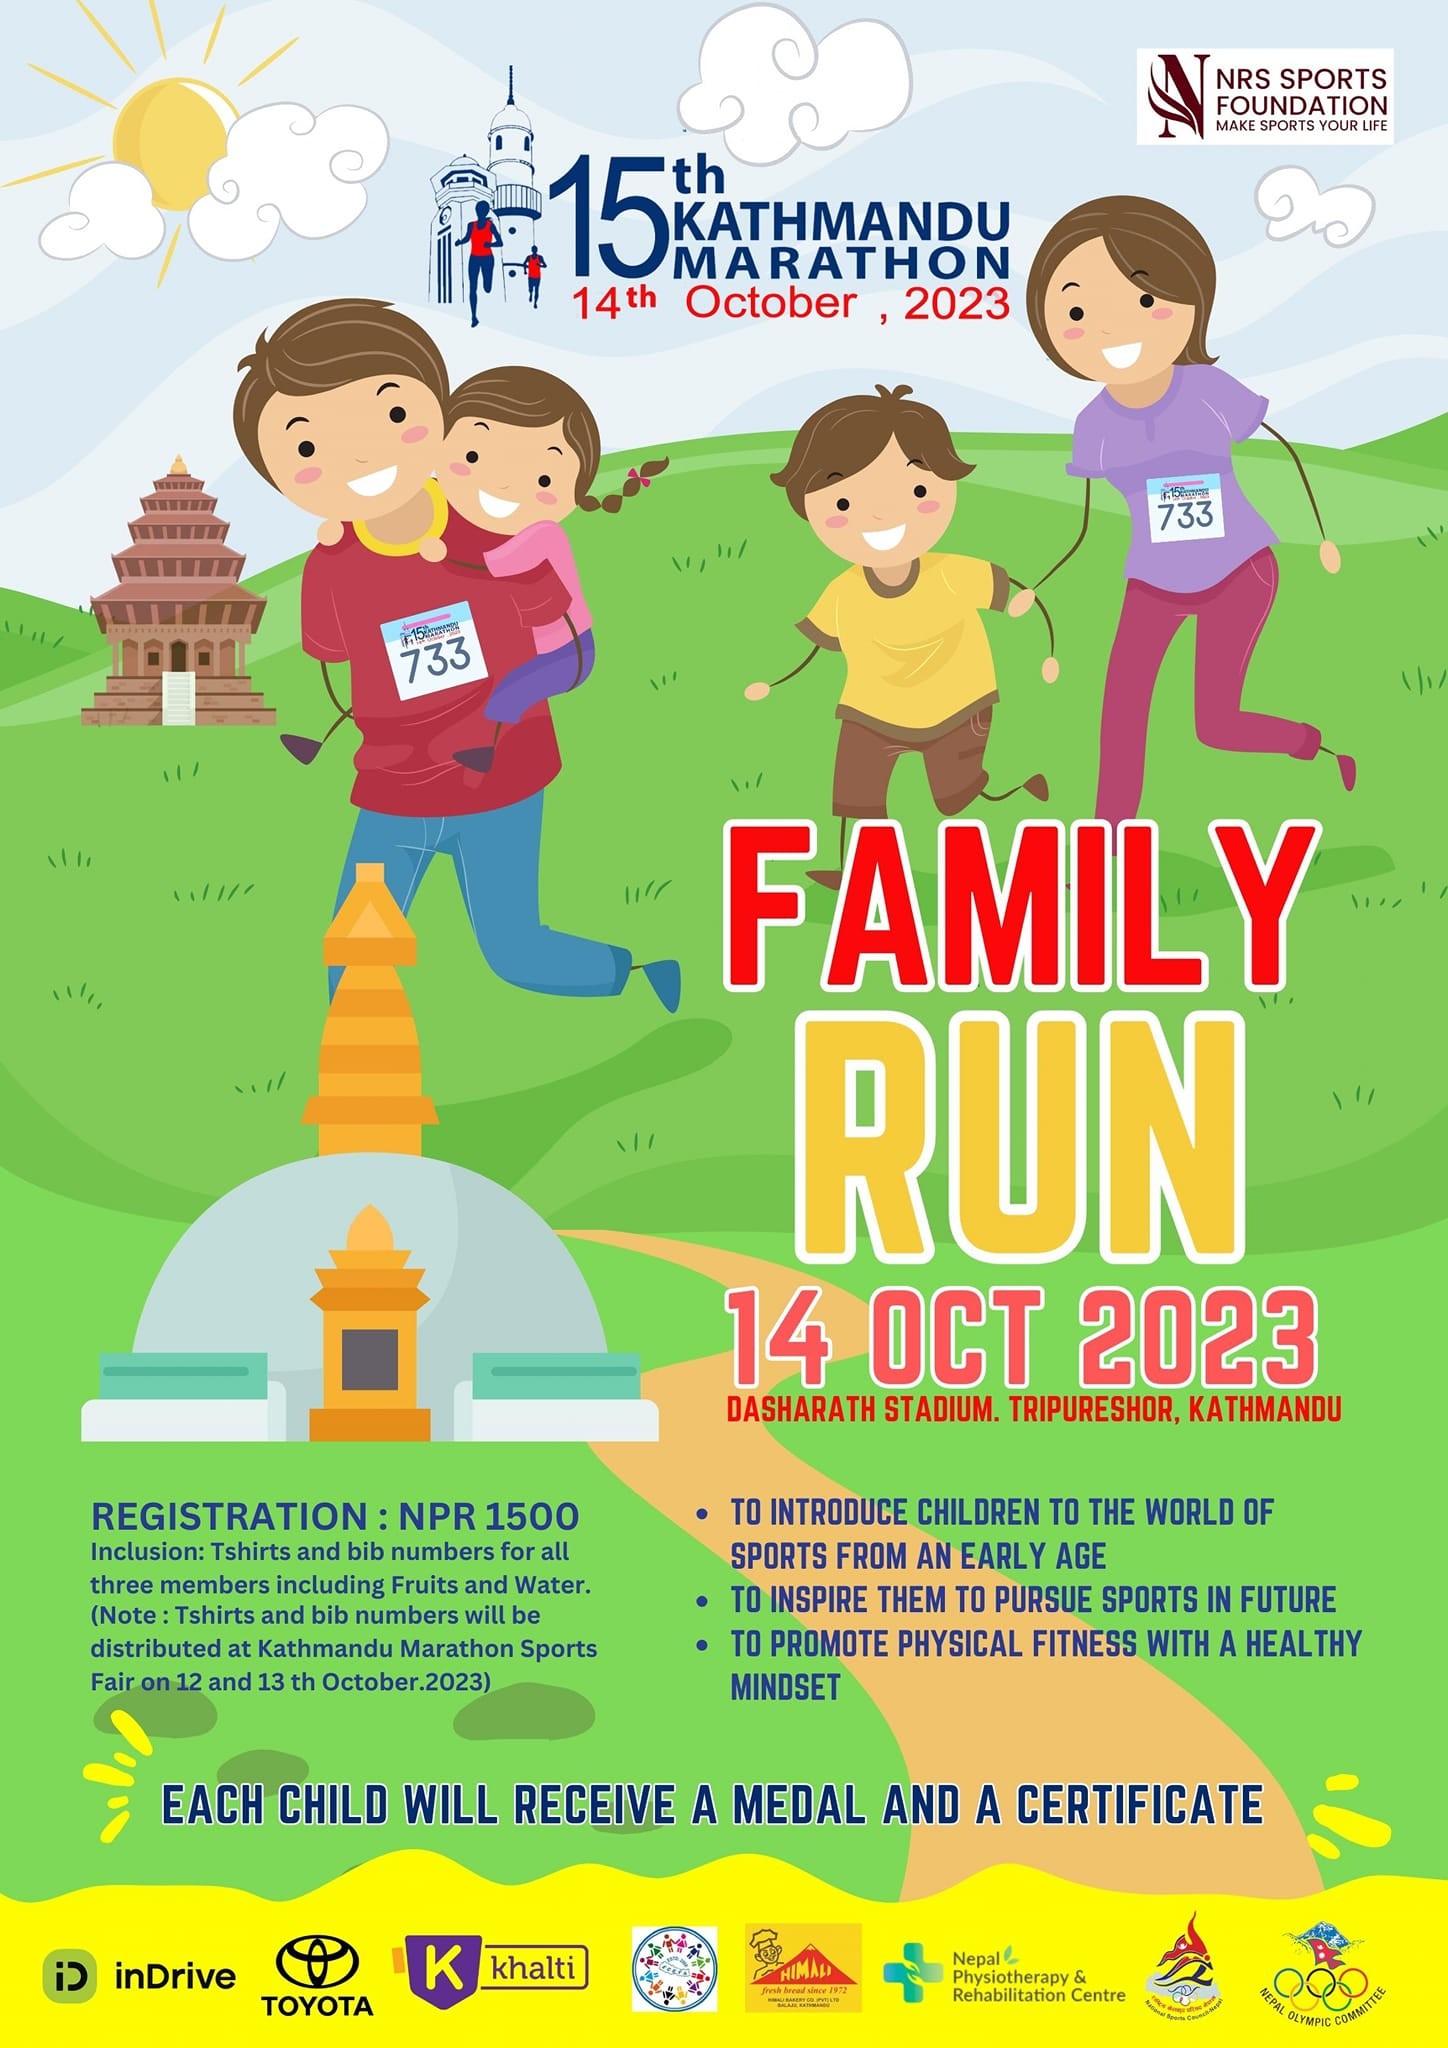 Family Run 2023 in Association with Kathmandu Marathon - NRS Sports Foundation